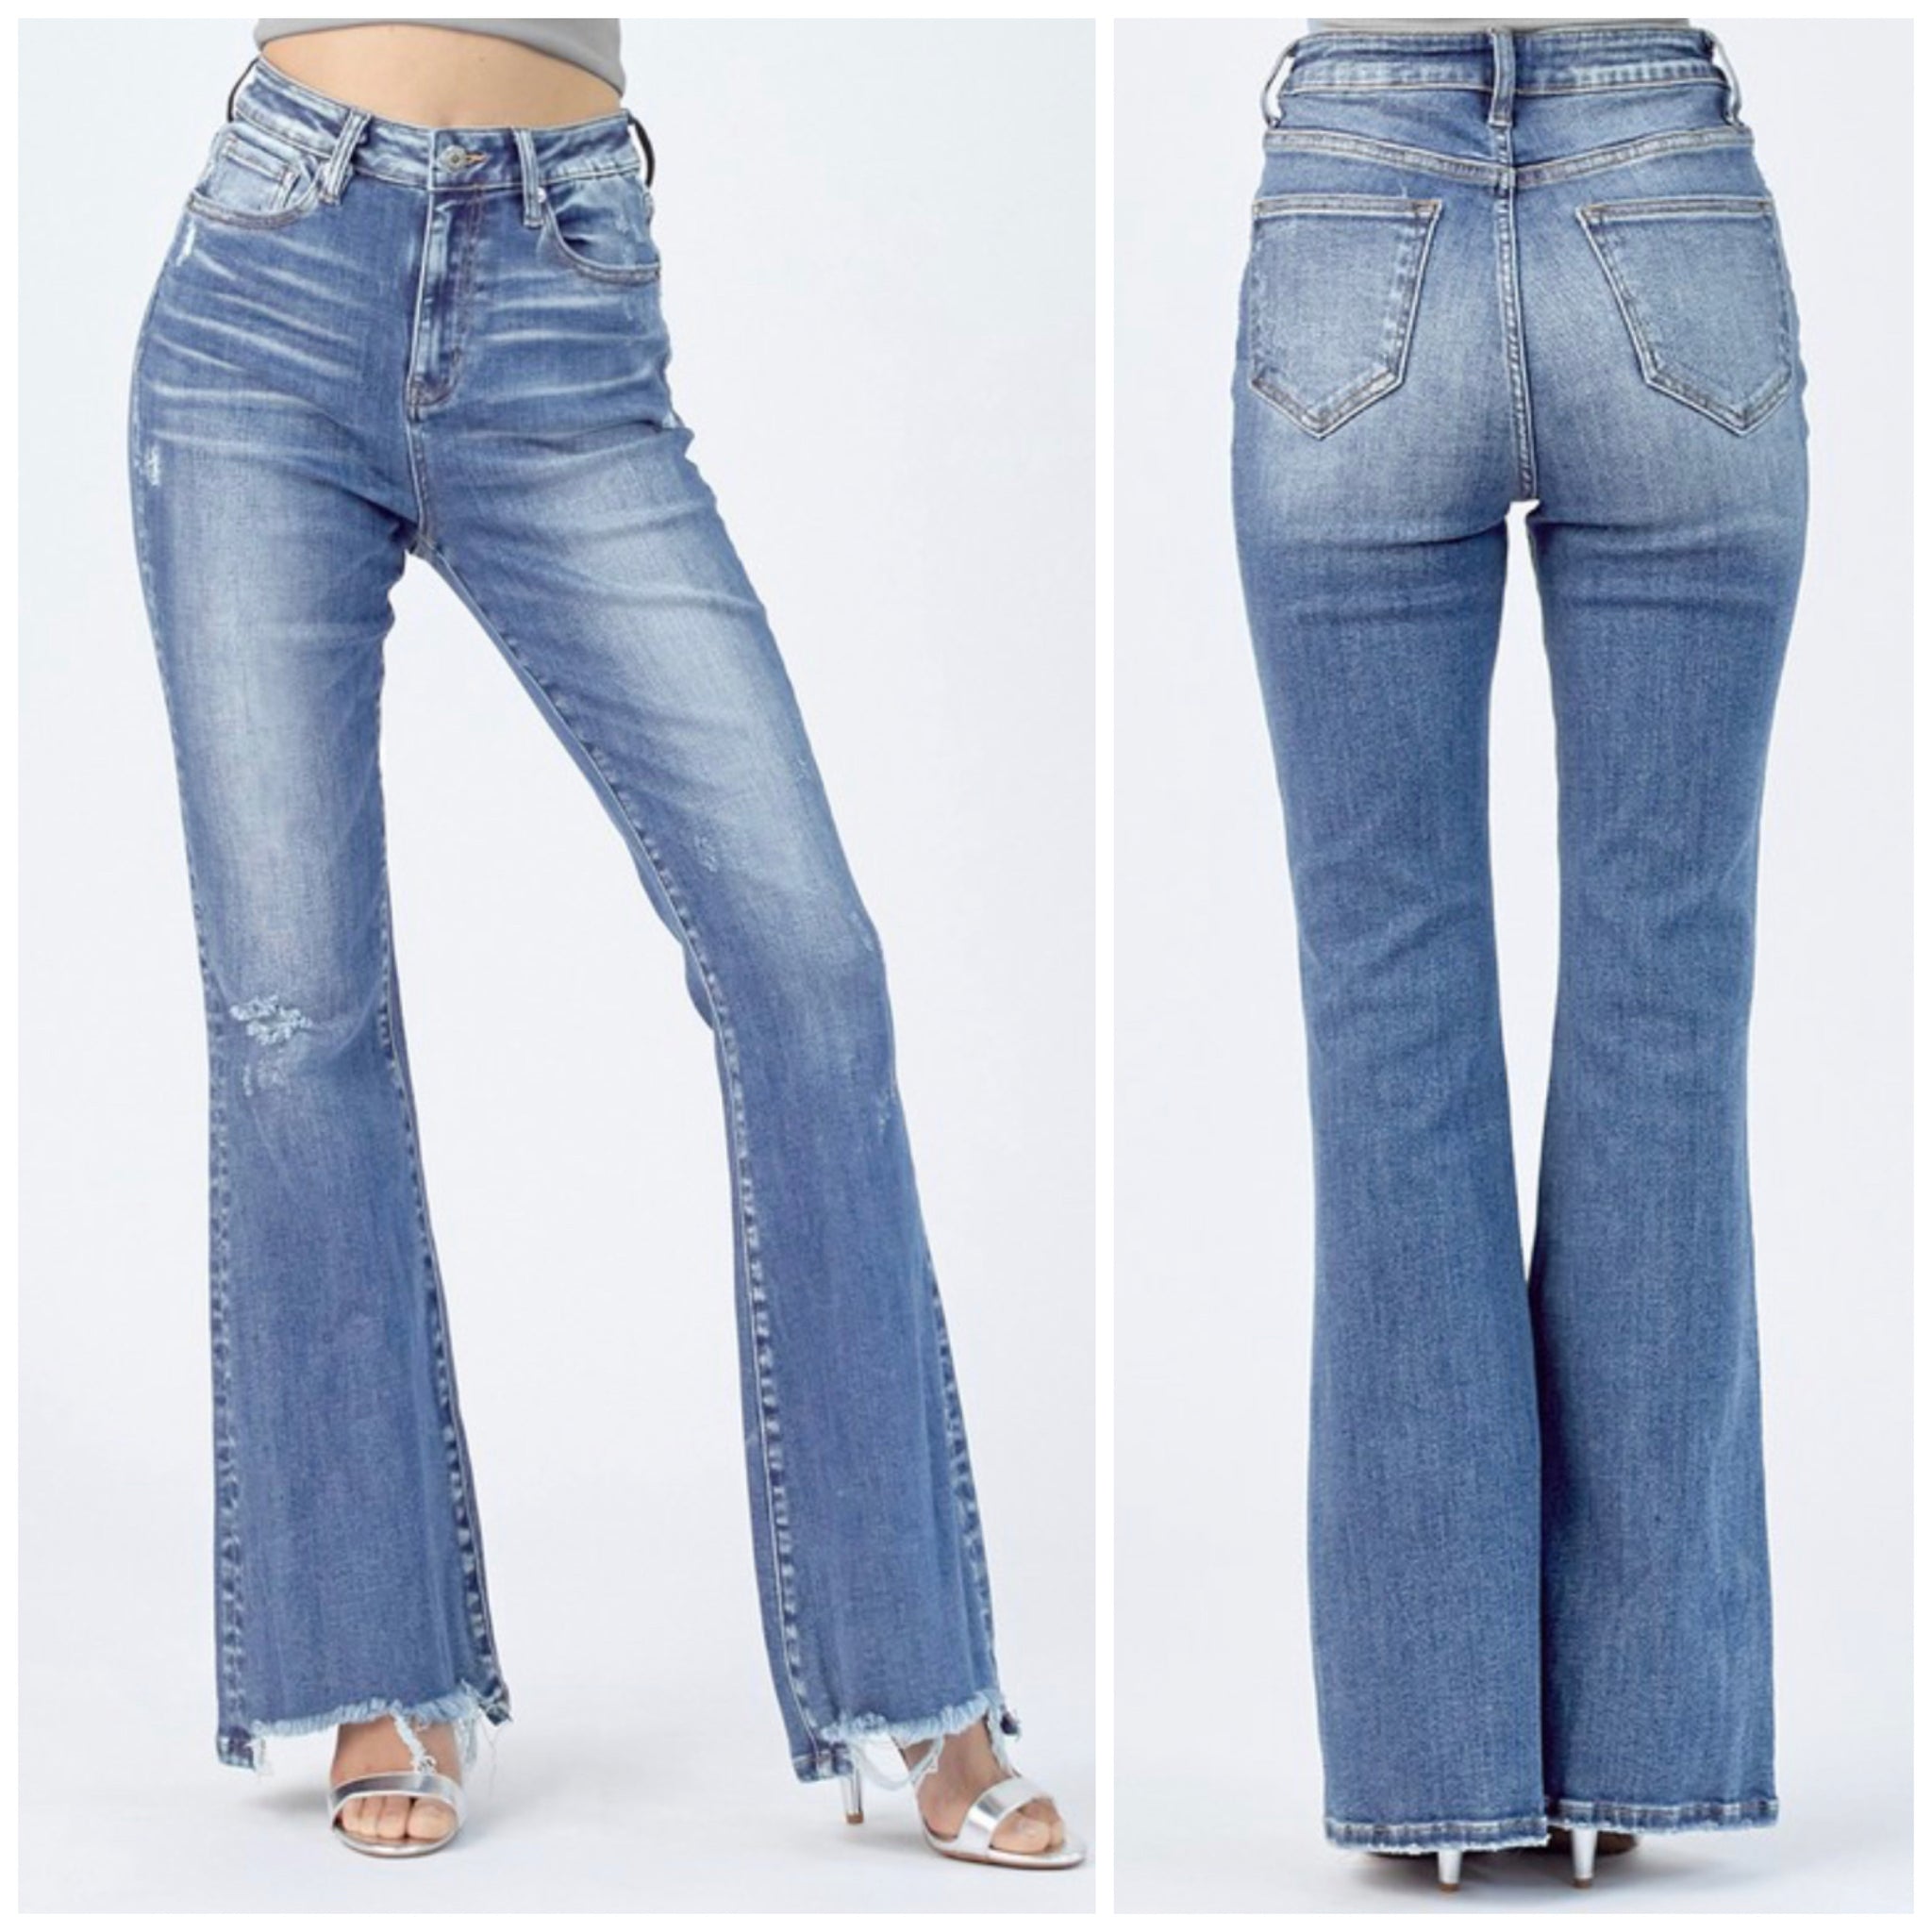 Risen “Gianni“ High Rise Flare Jeans